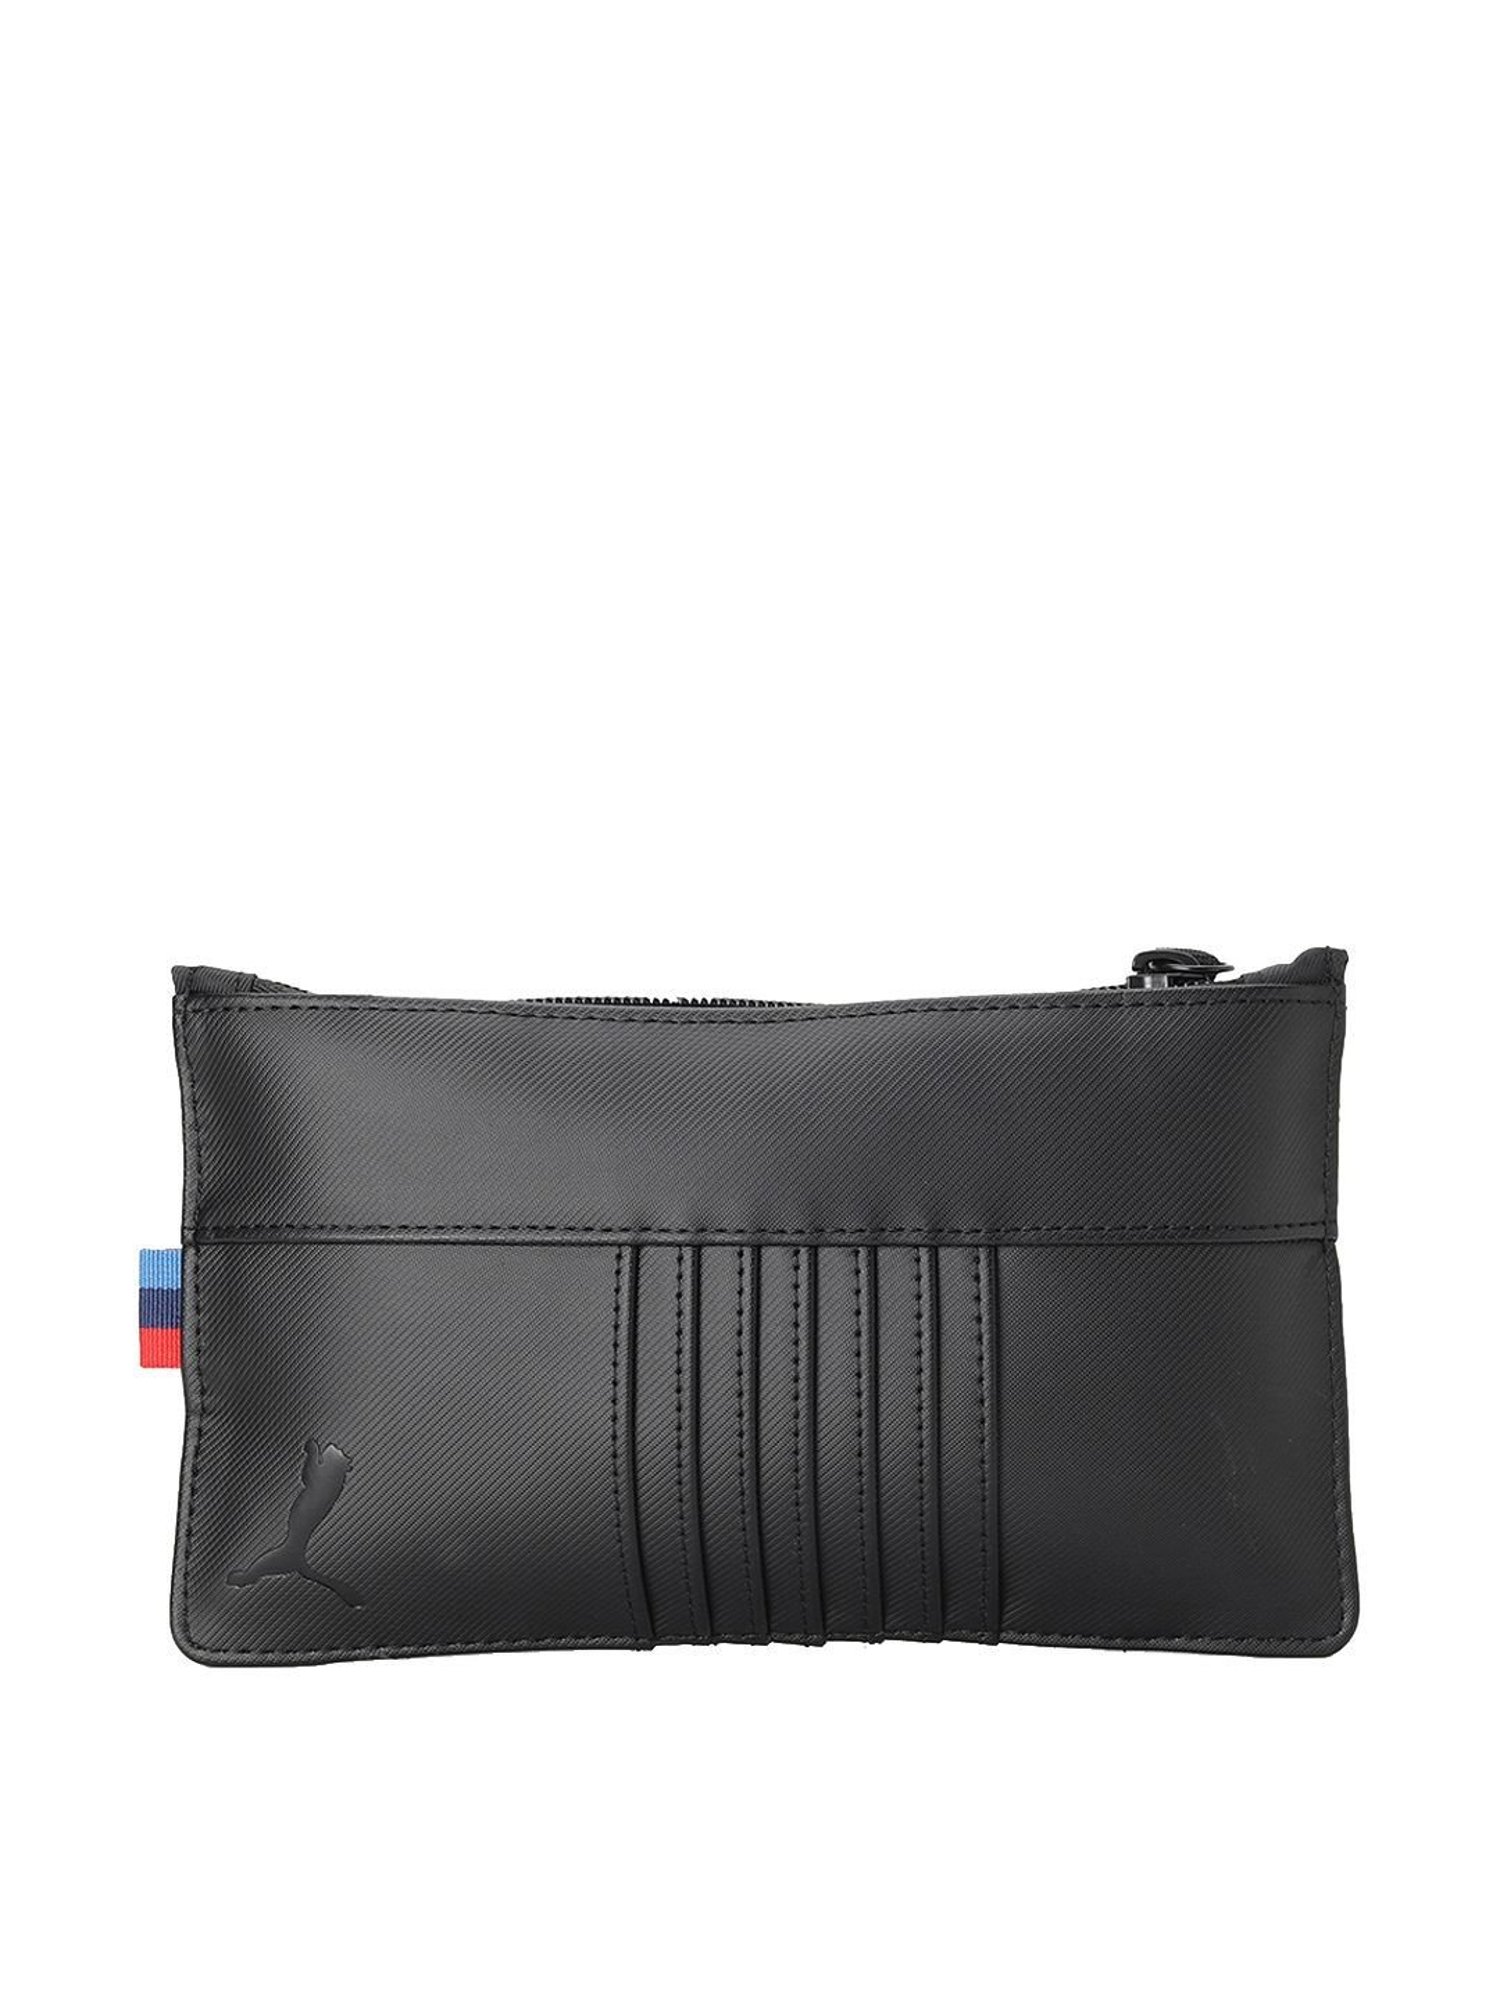 sabyasachi clutch gift for her Evening sabyasachi brand bag Women Purse  Handbag | eBay